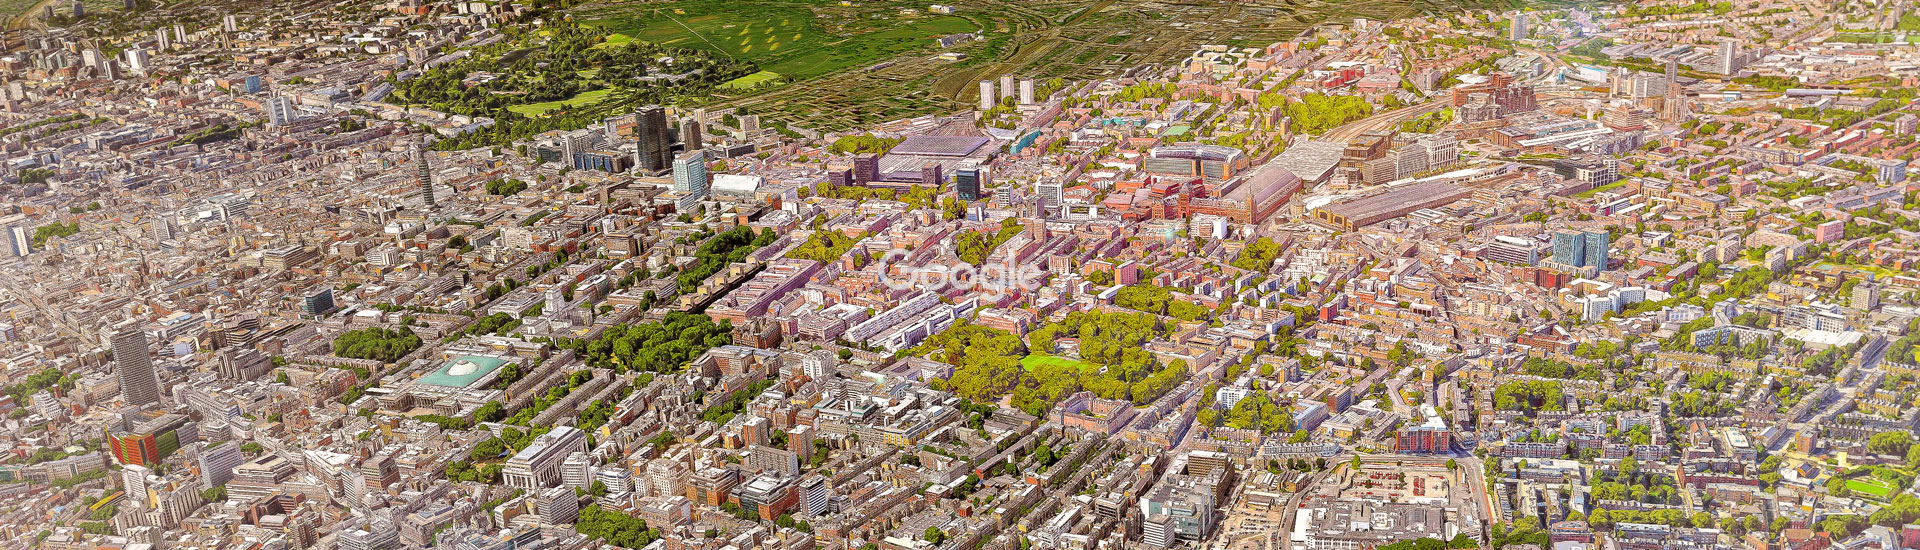 Troy Planning + Design to prepare Camden Infrastructure Study